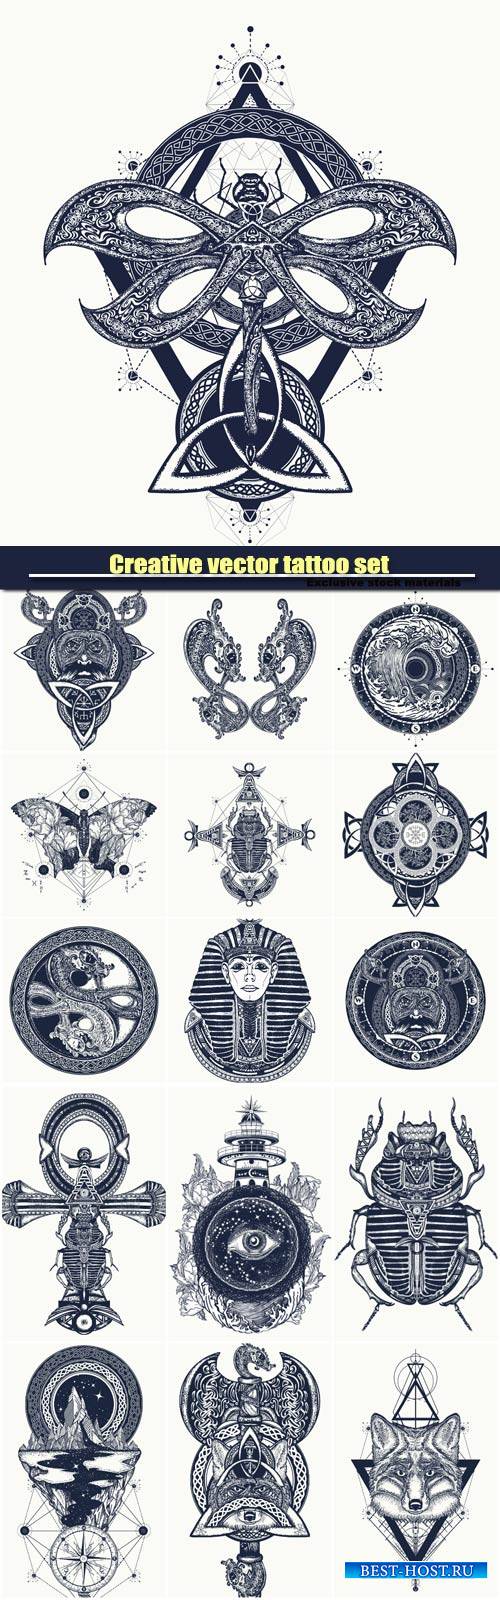 Creative vector tattoo set